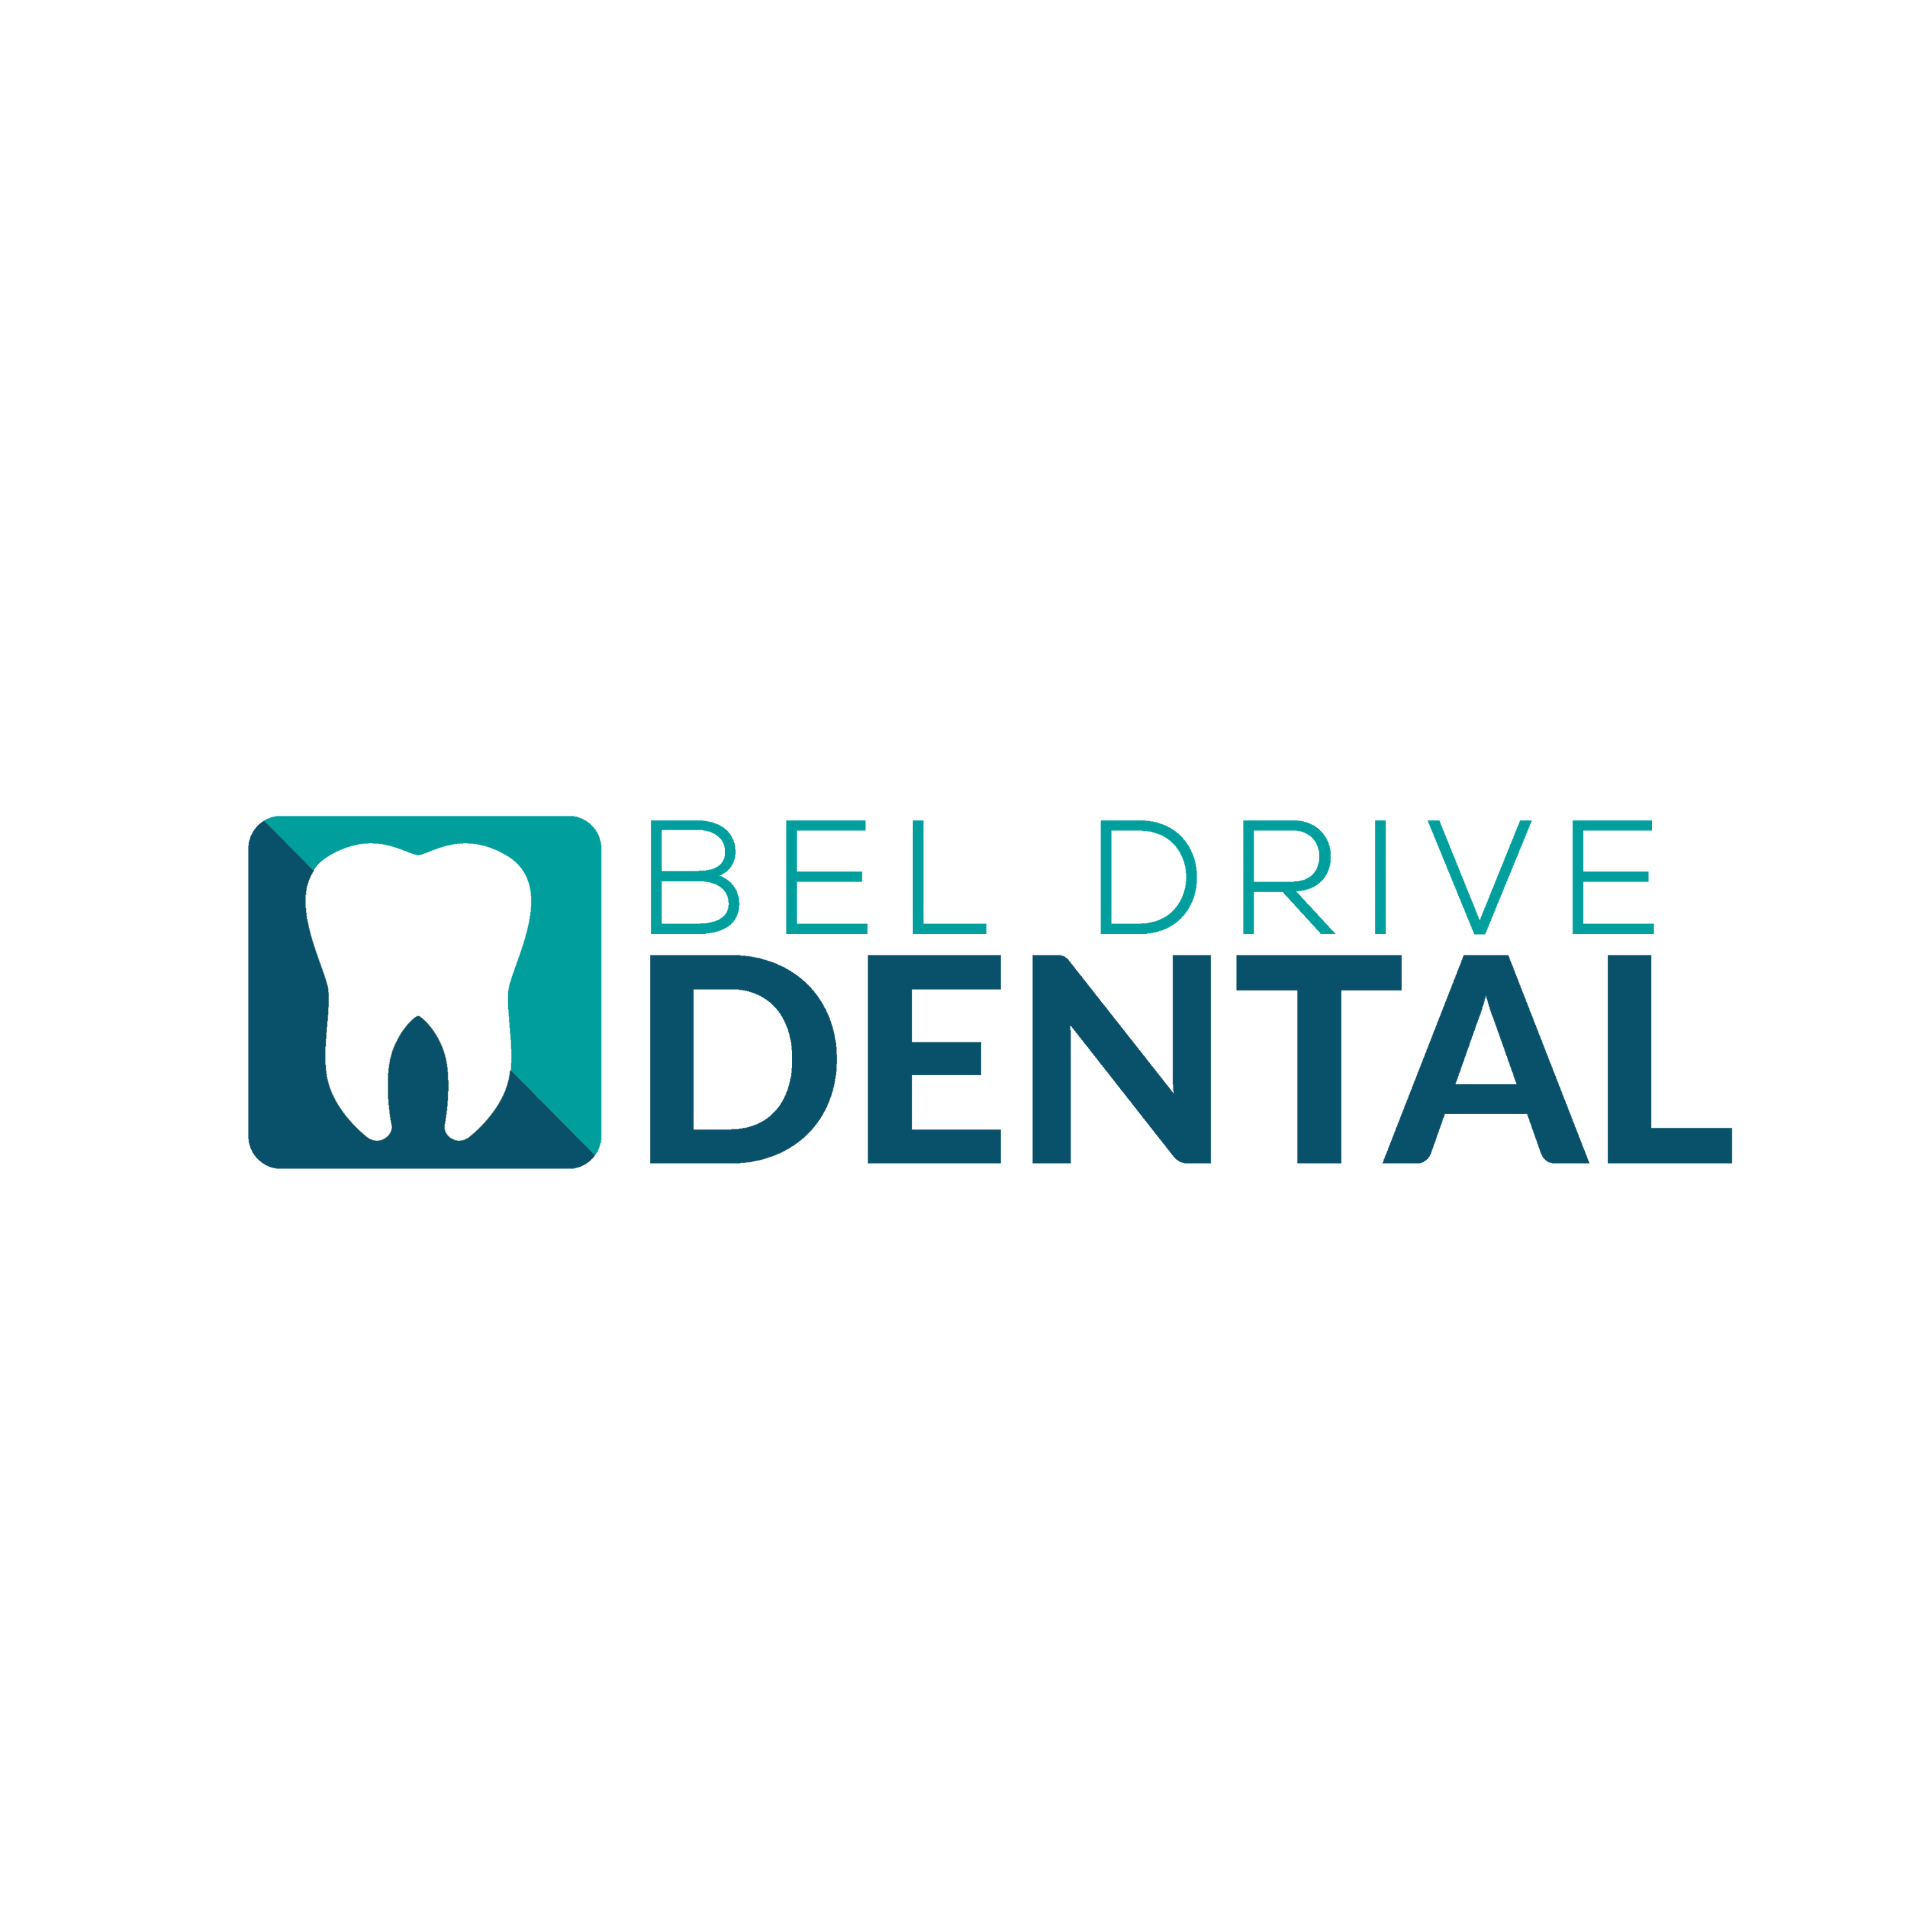 Bel Drive Dental